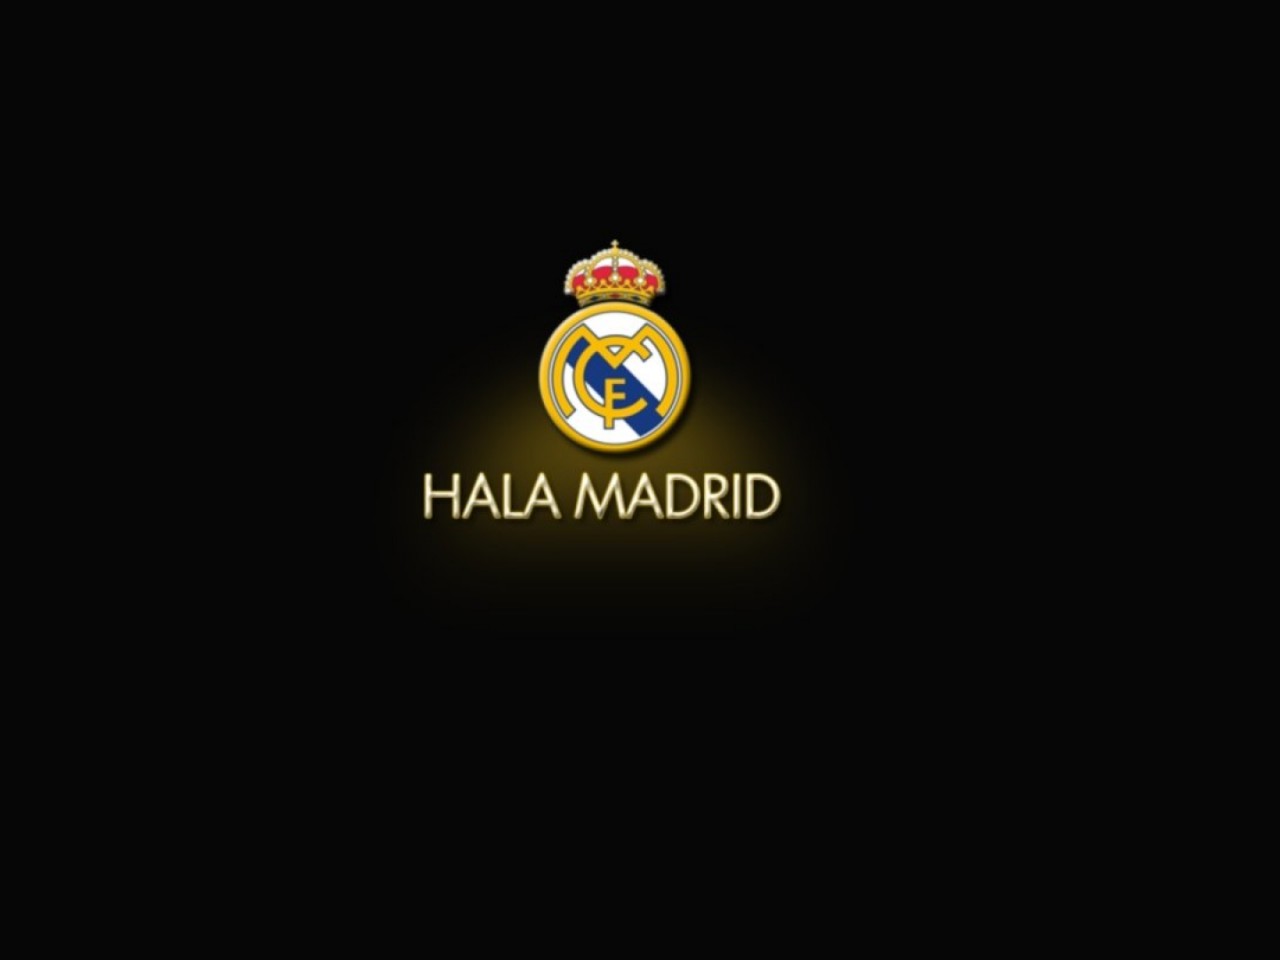 Real Madrid black Wallpaper - High Definition, High Resolution HD Wallpapers  : High Definition, High Resolution HD Wallpapers